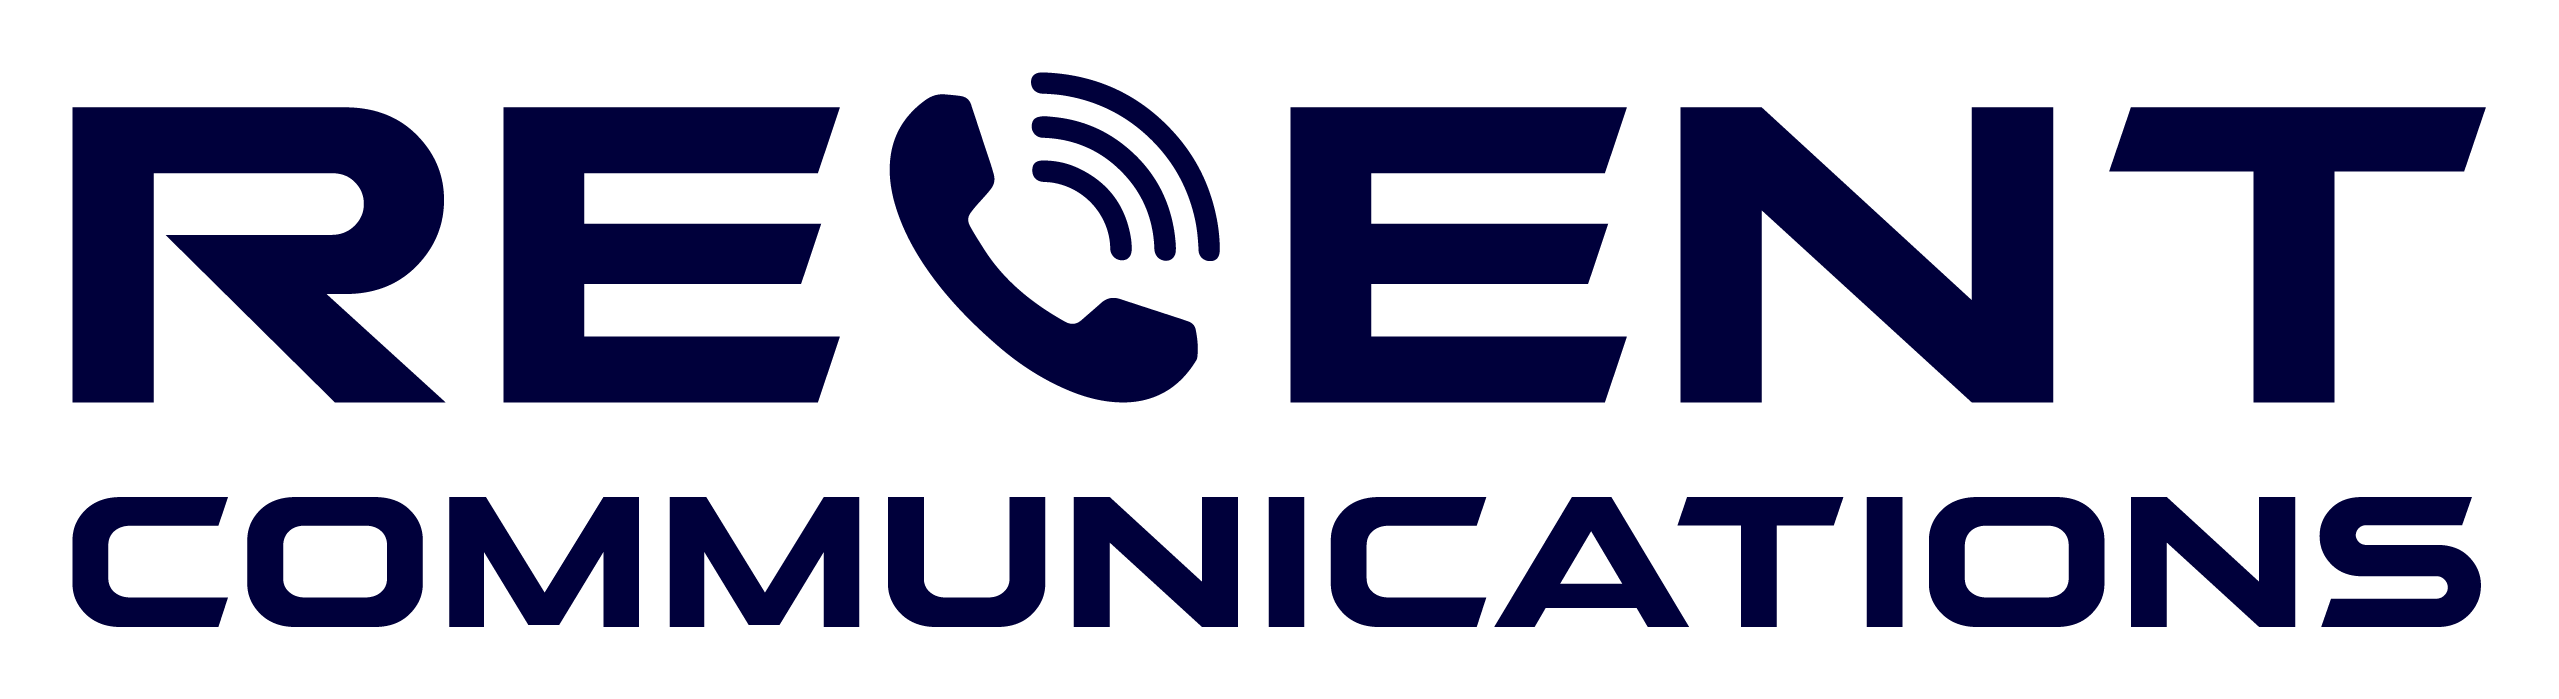 Recent Communications logo